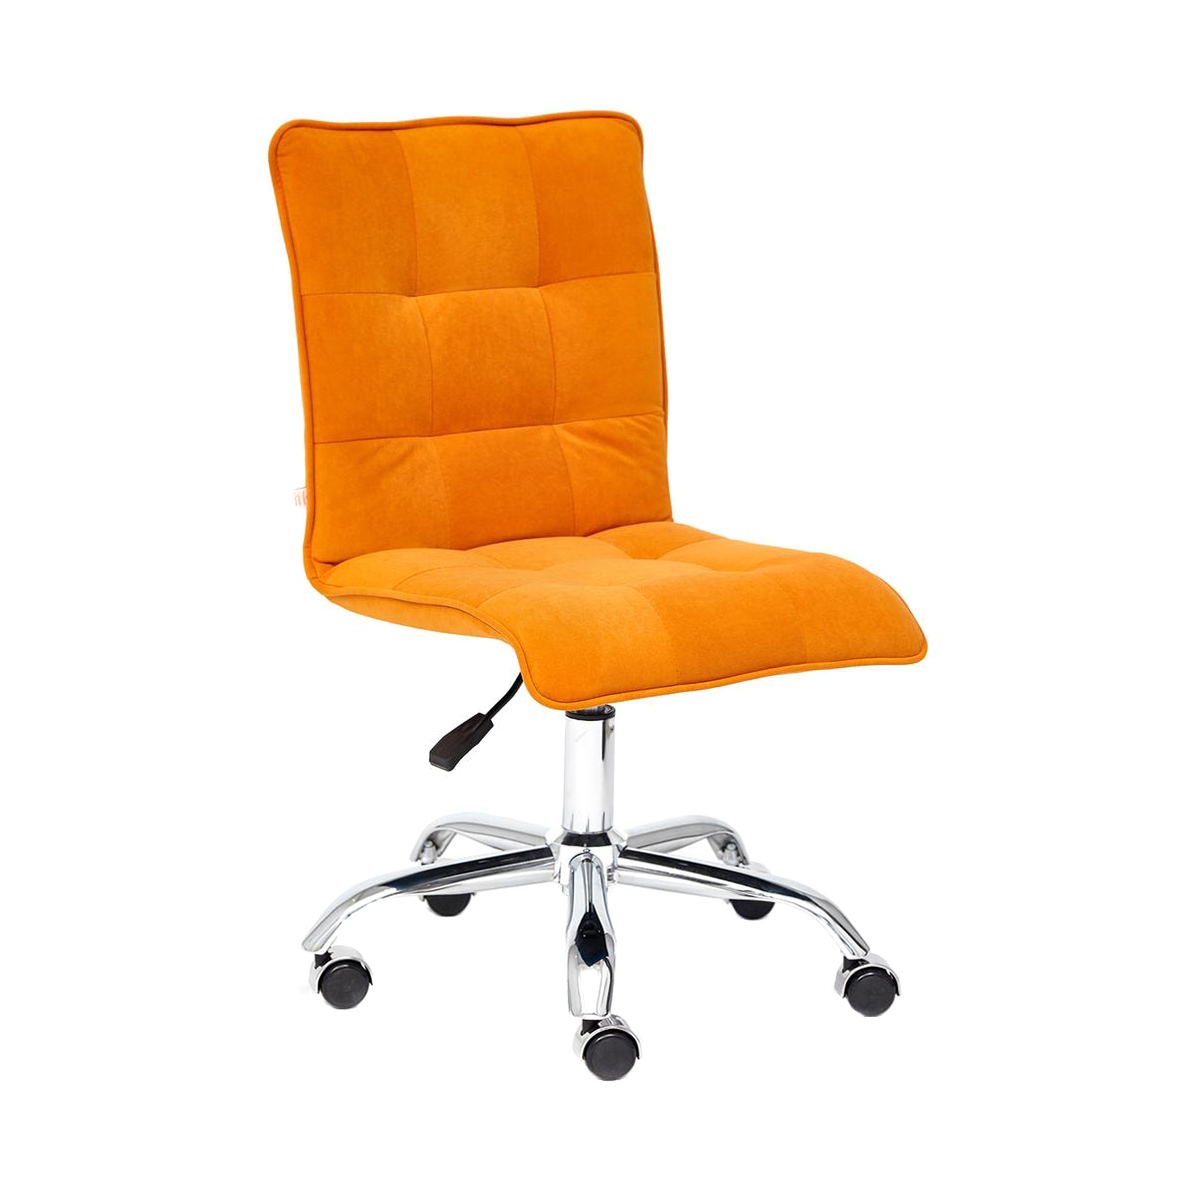 Кресло офисное TC до 100 кг 96х45х40 см оранжевый кресло офисное tc до 100 кг 96х45х40 см оливковый